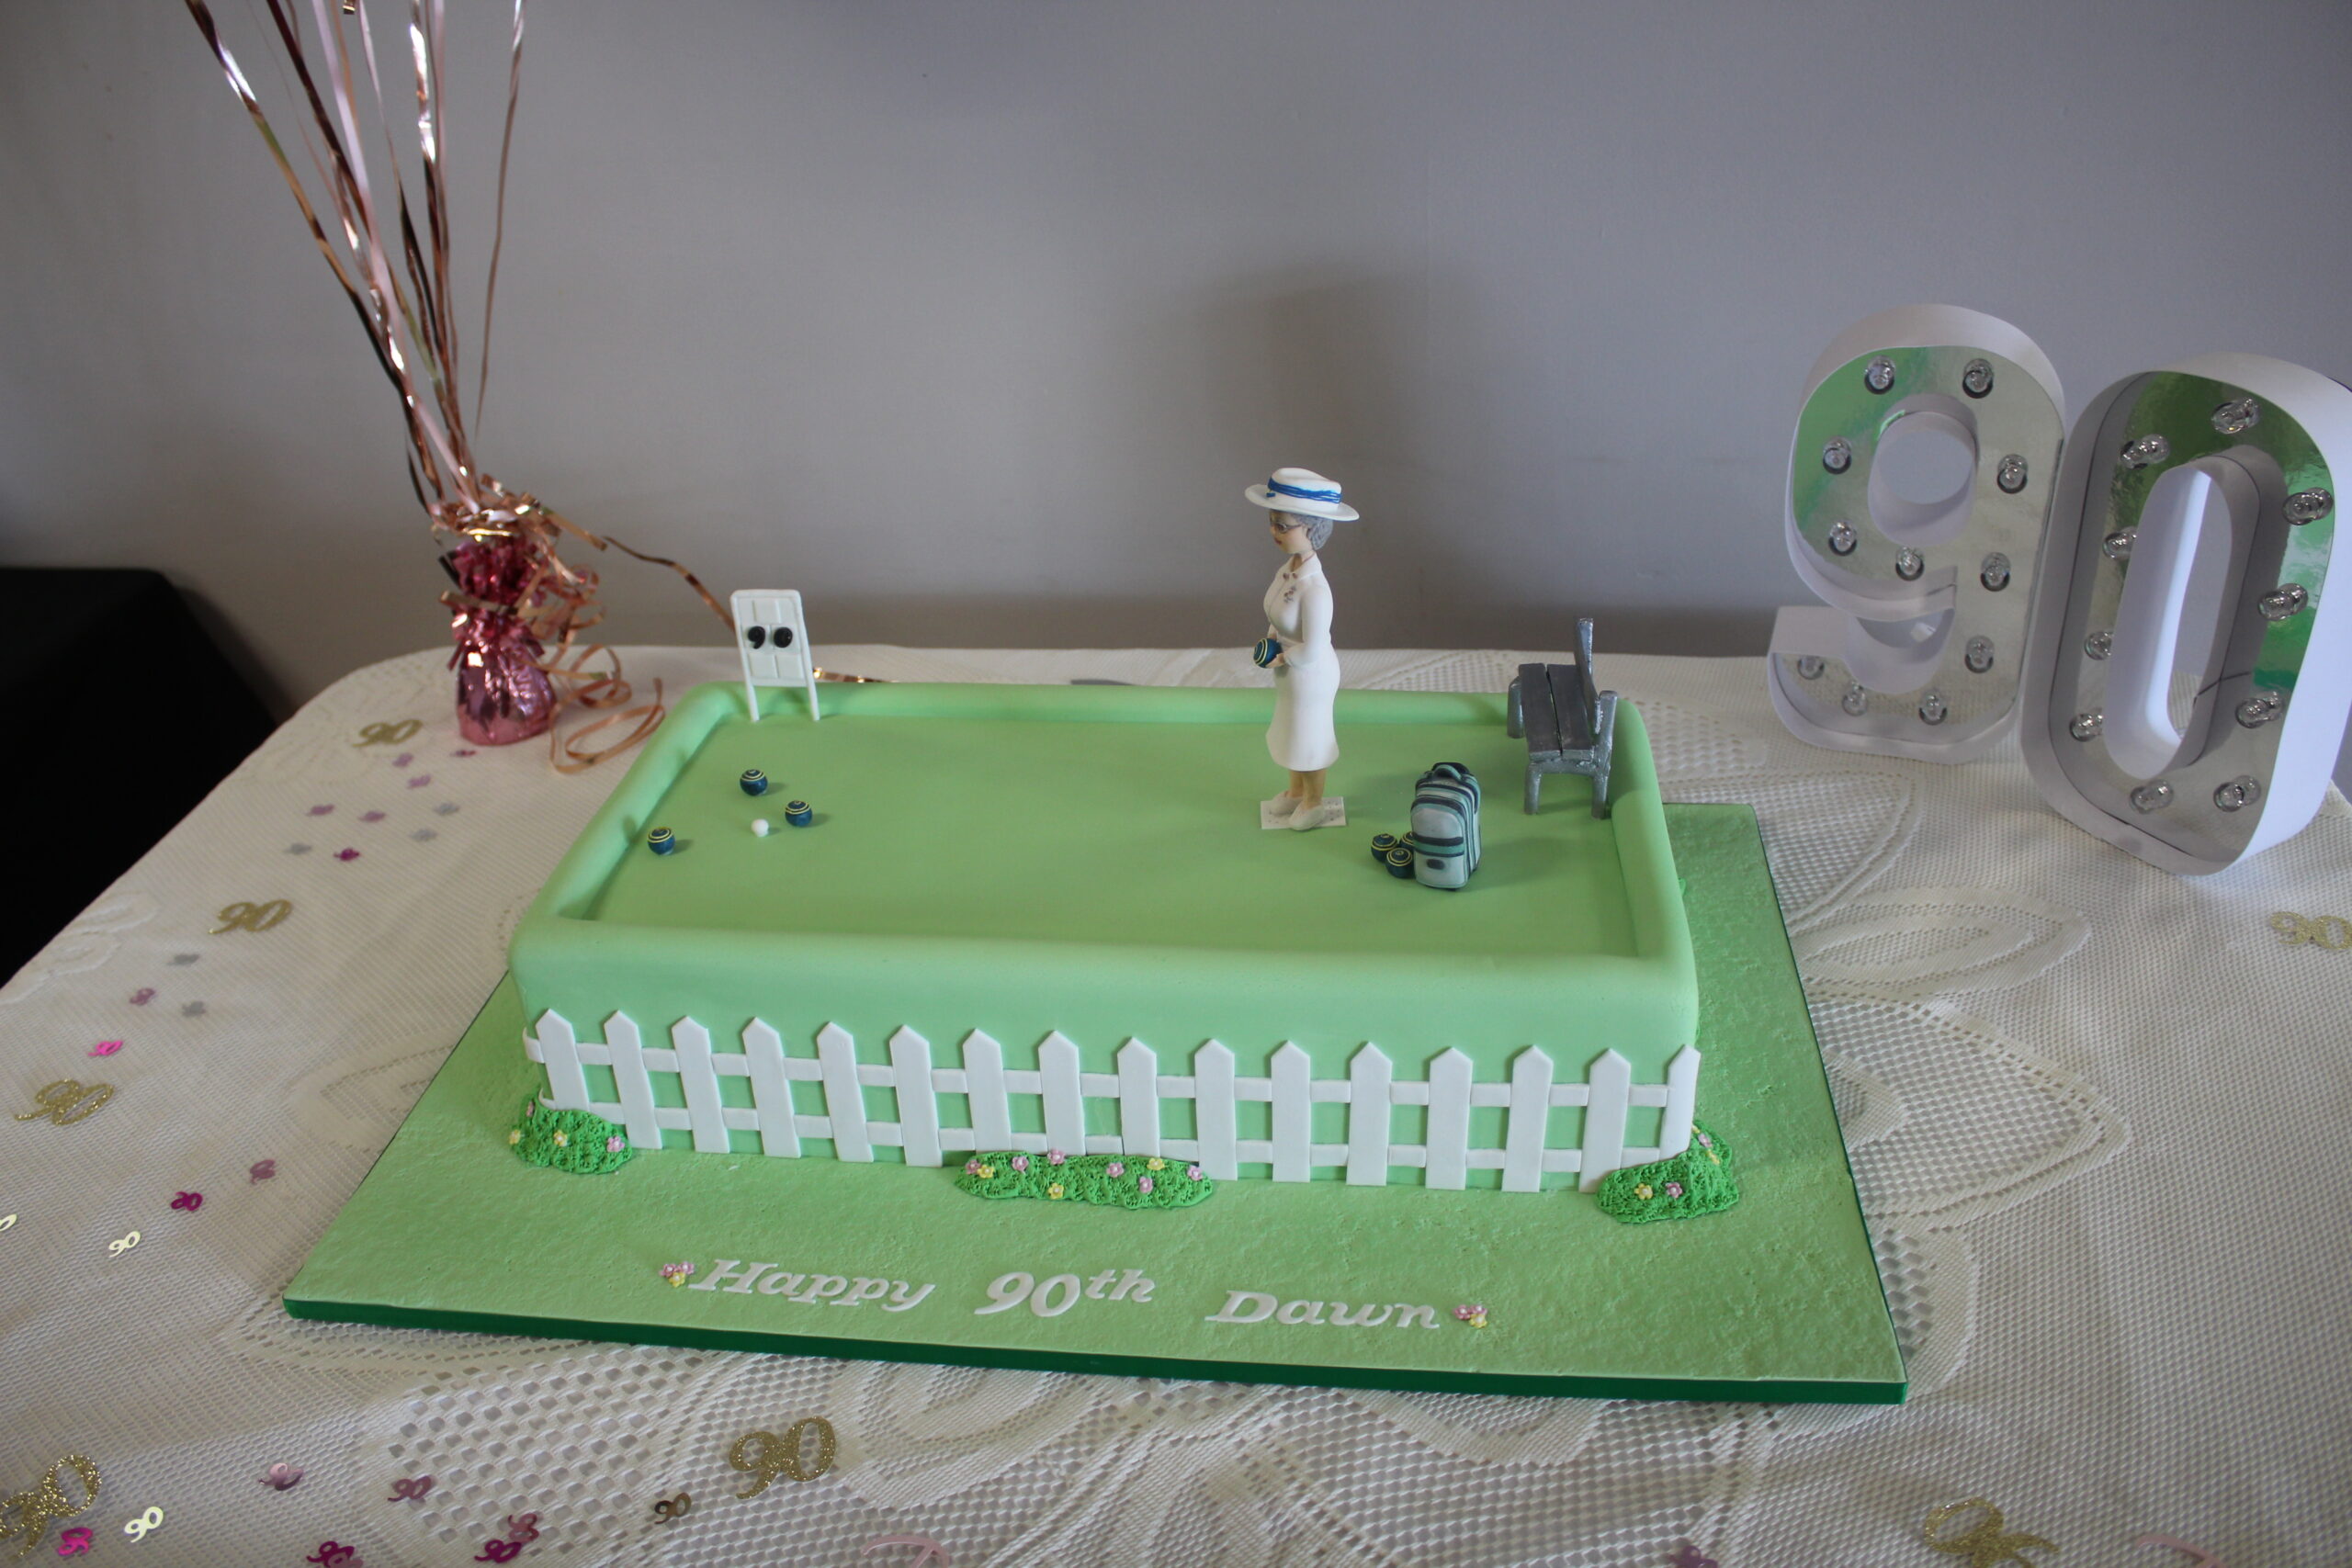 Dawn's 90th birthday cake was made by Robyn Pattison.